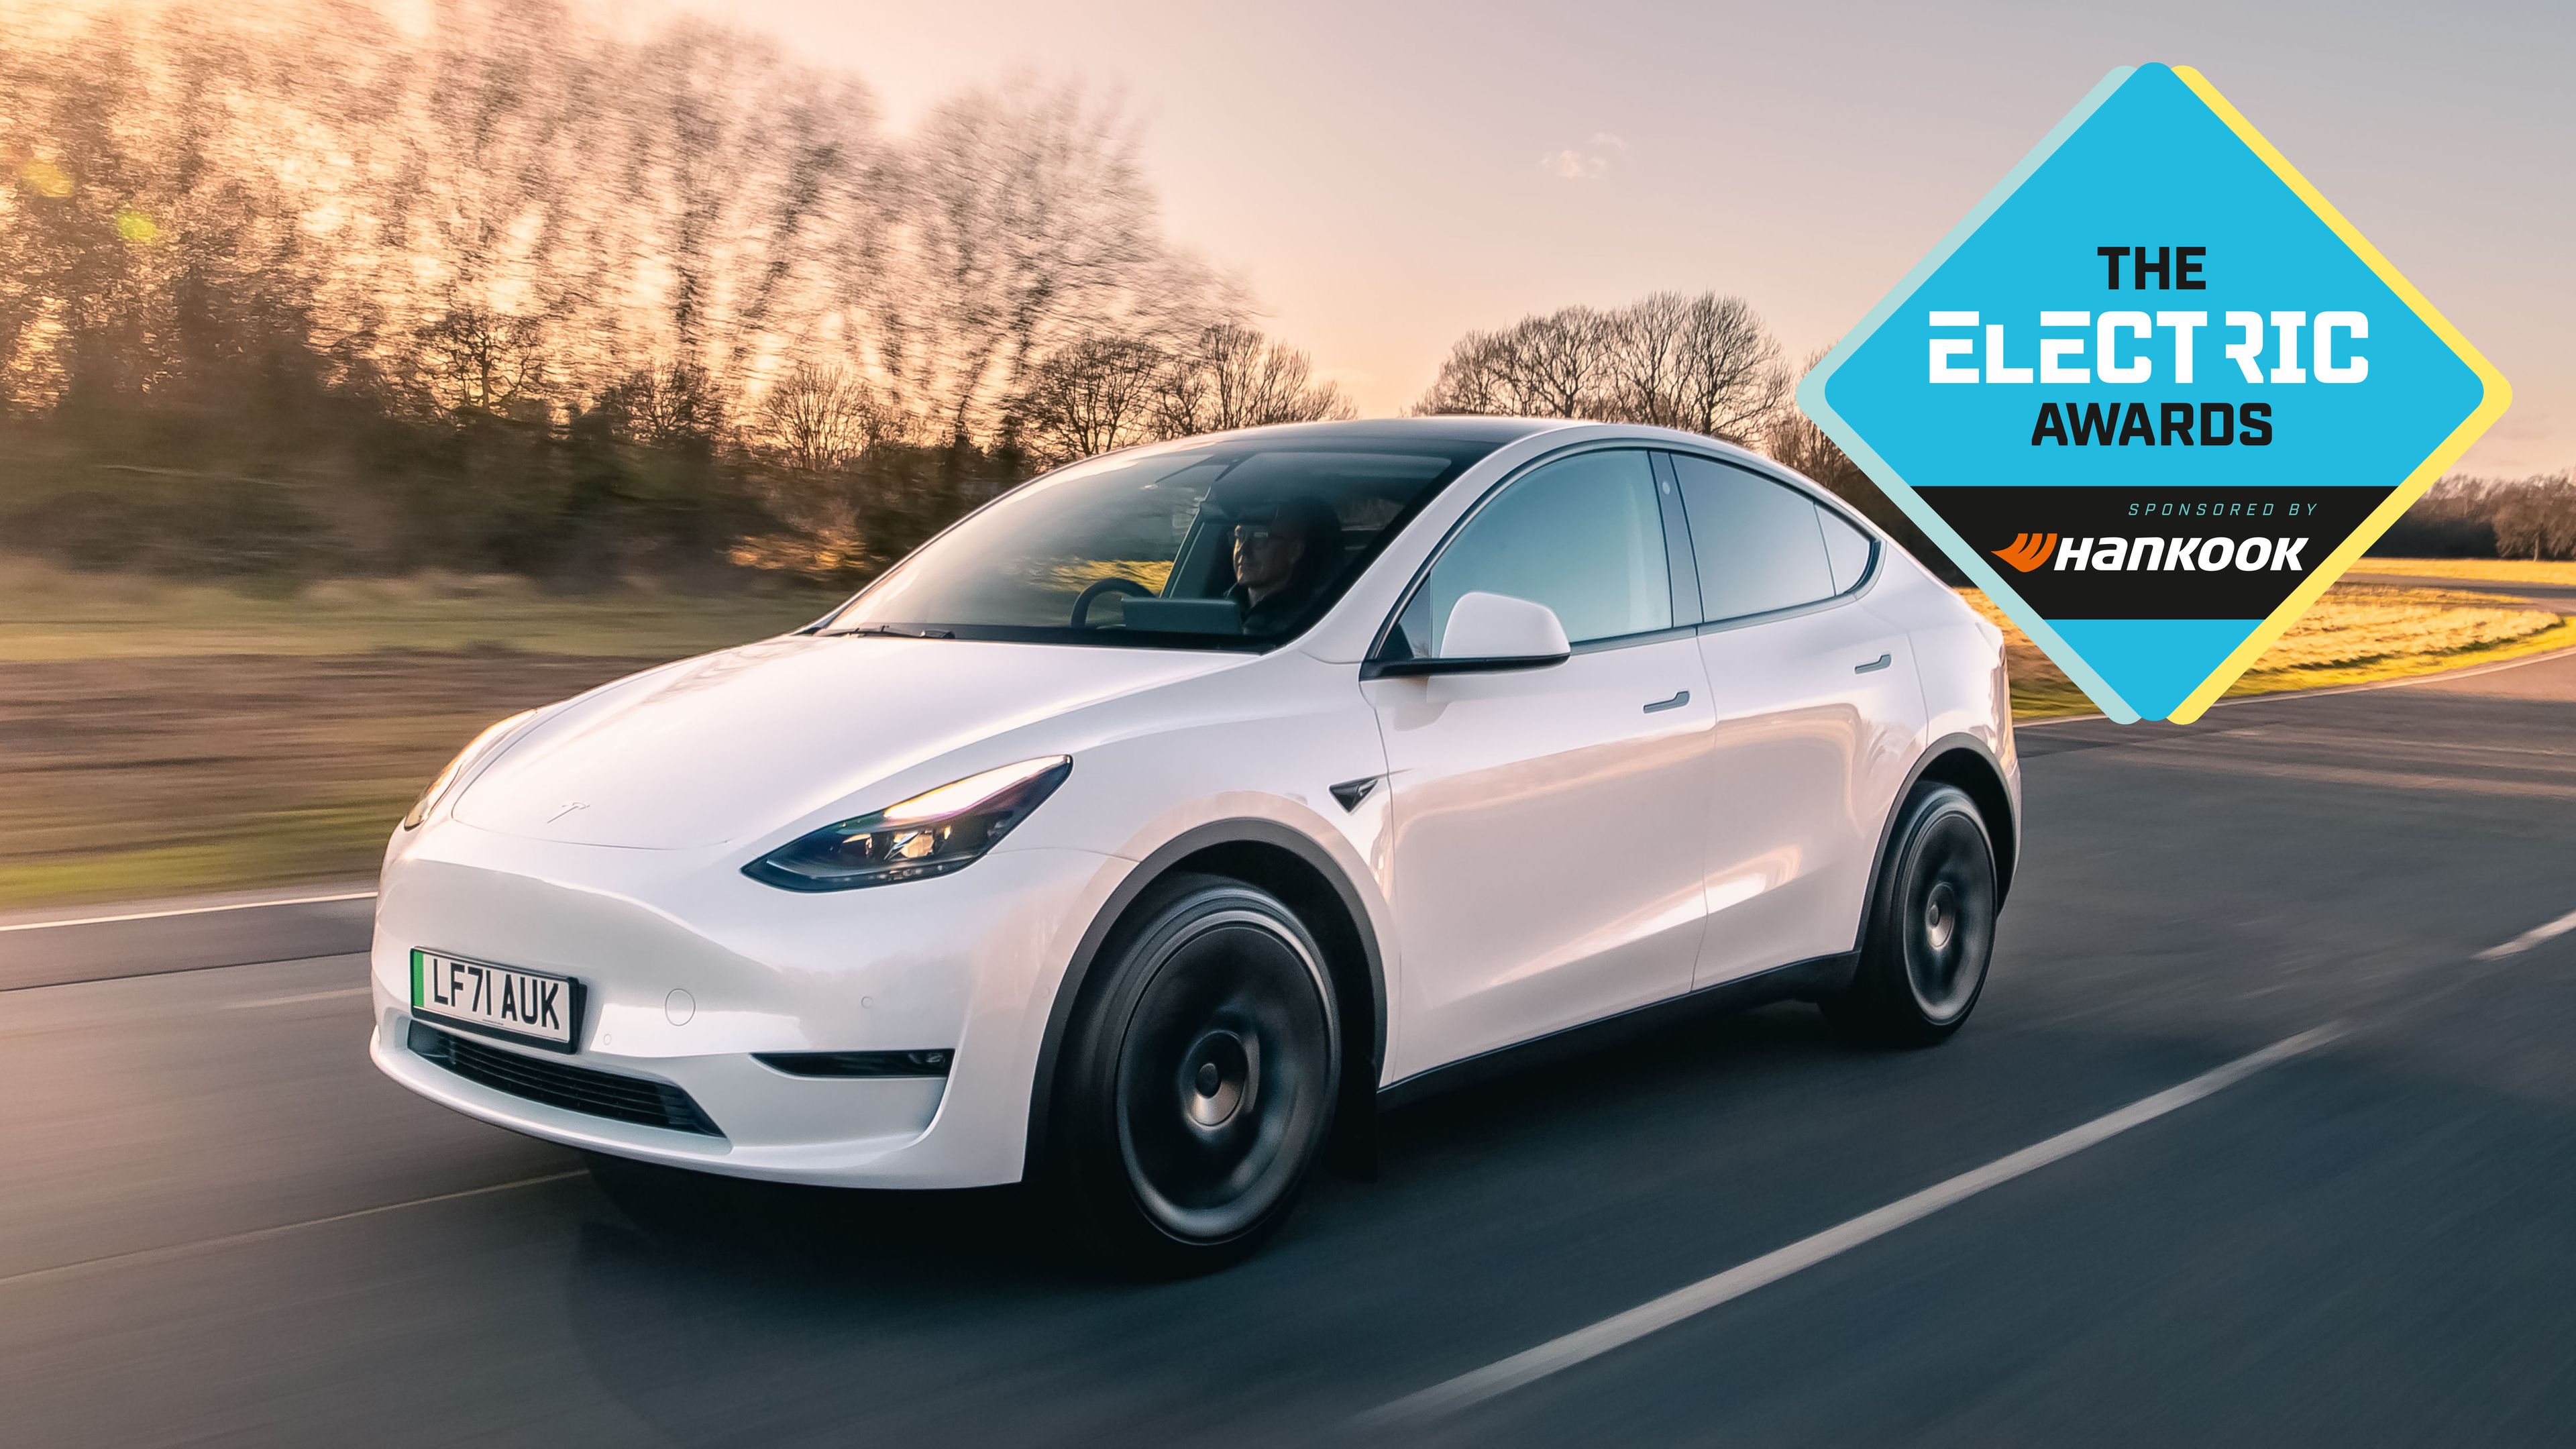 Tesla Model Y Electric Awards 2022